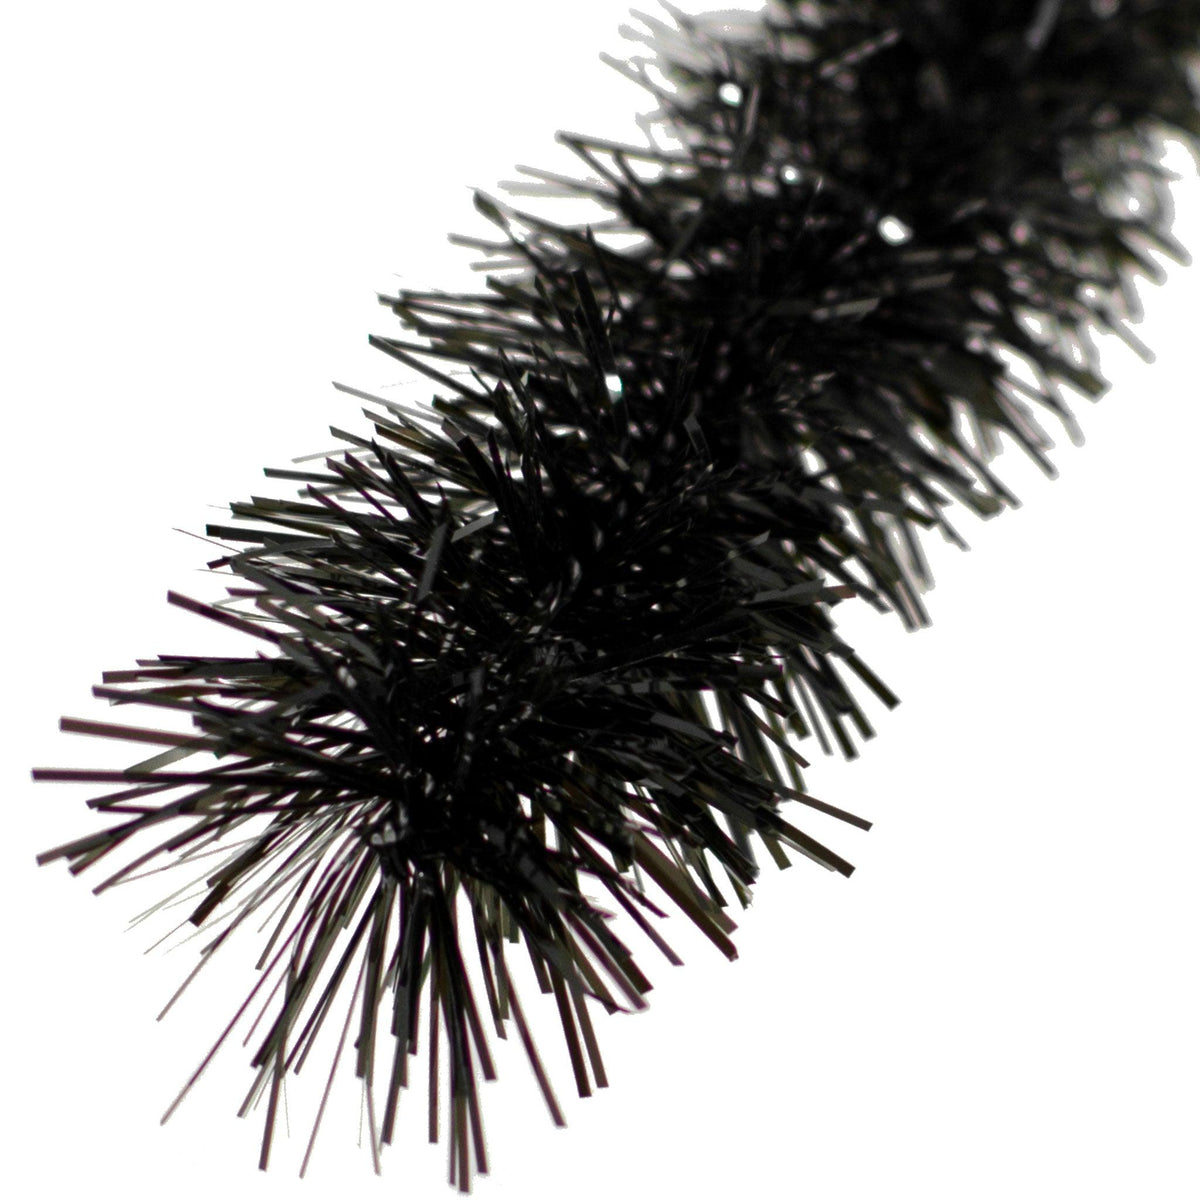 Lee Display's brand new 25FT Metallic Black Tinsel Garlands and Fringe Embellishments on sale at leedisplay.com